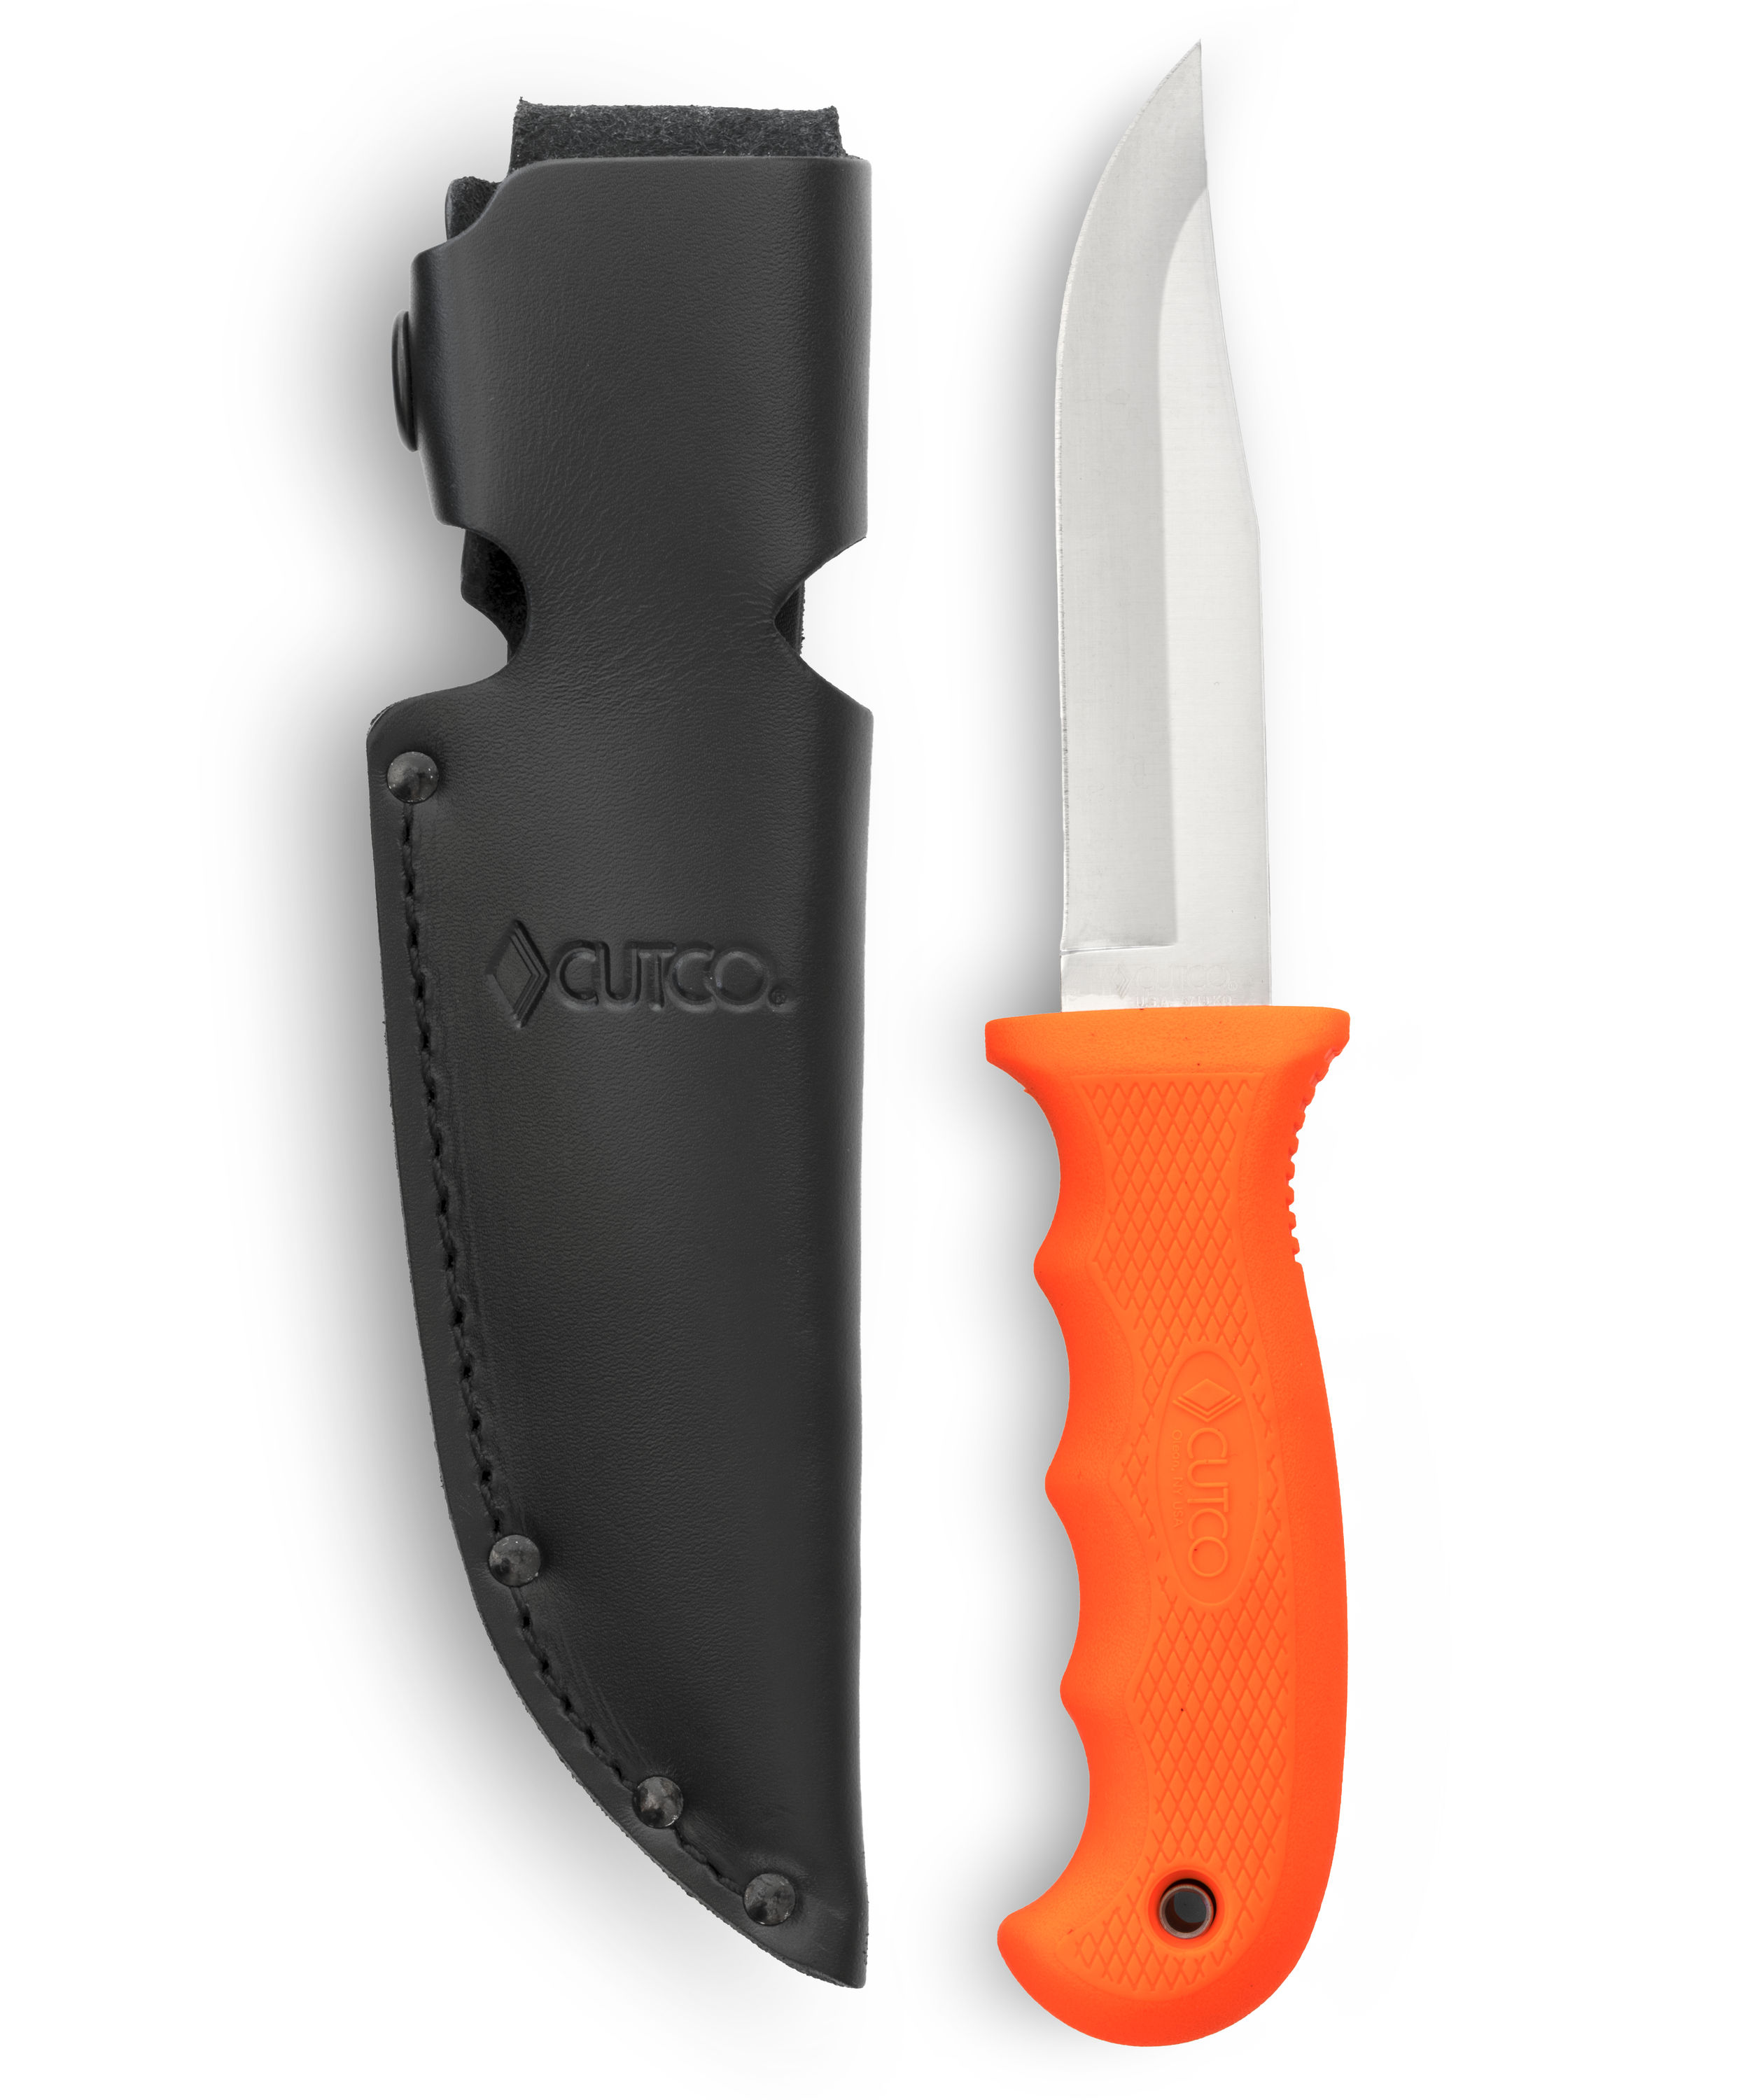 2-3/4 Lockback Knife  Sporting Knives by Cutco